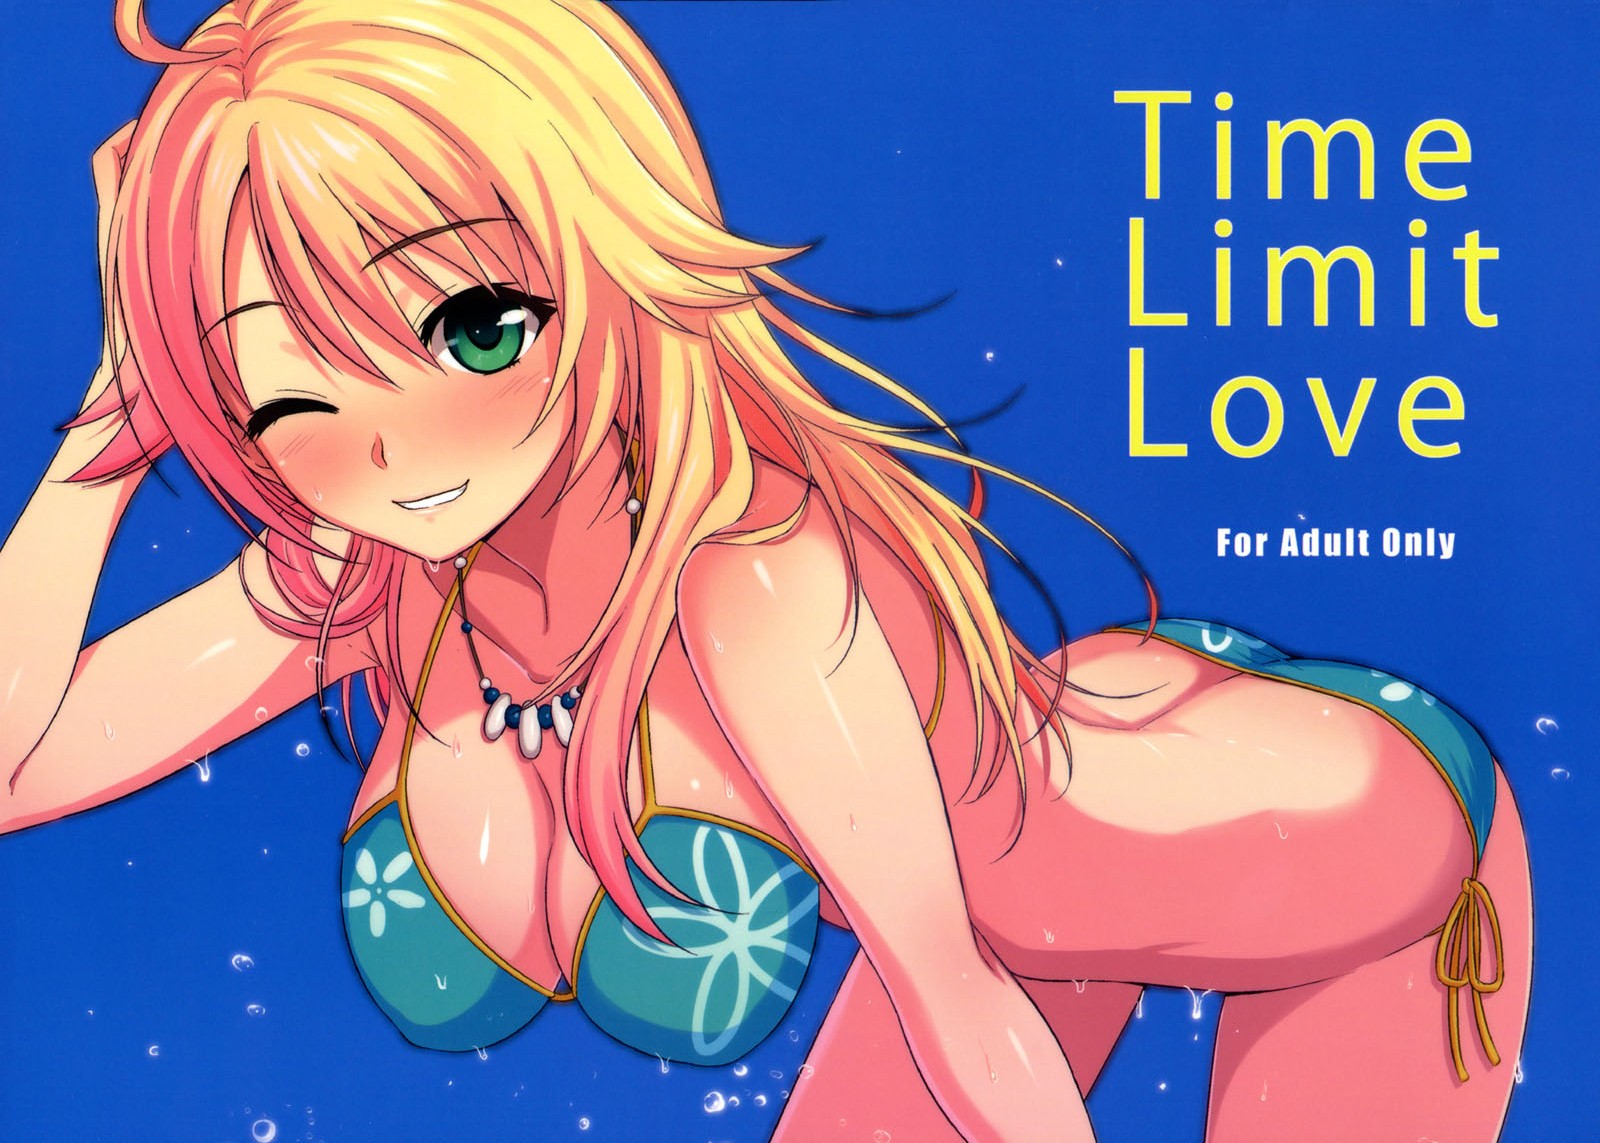 000 time limit love